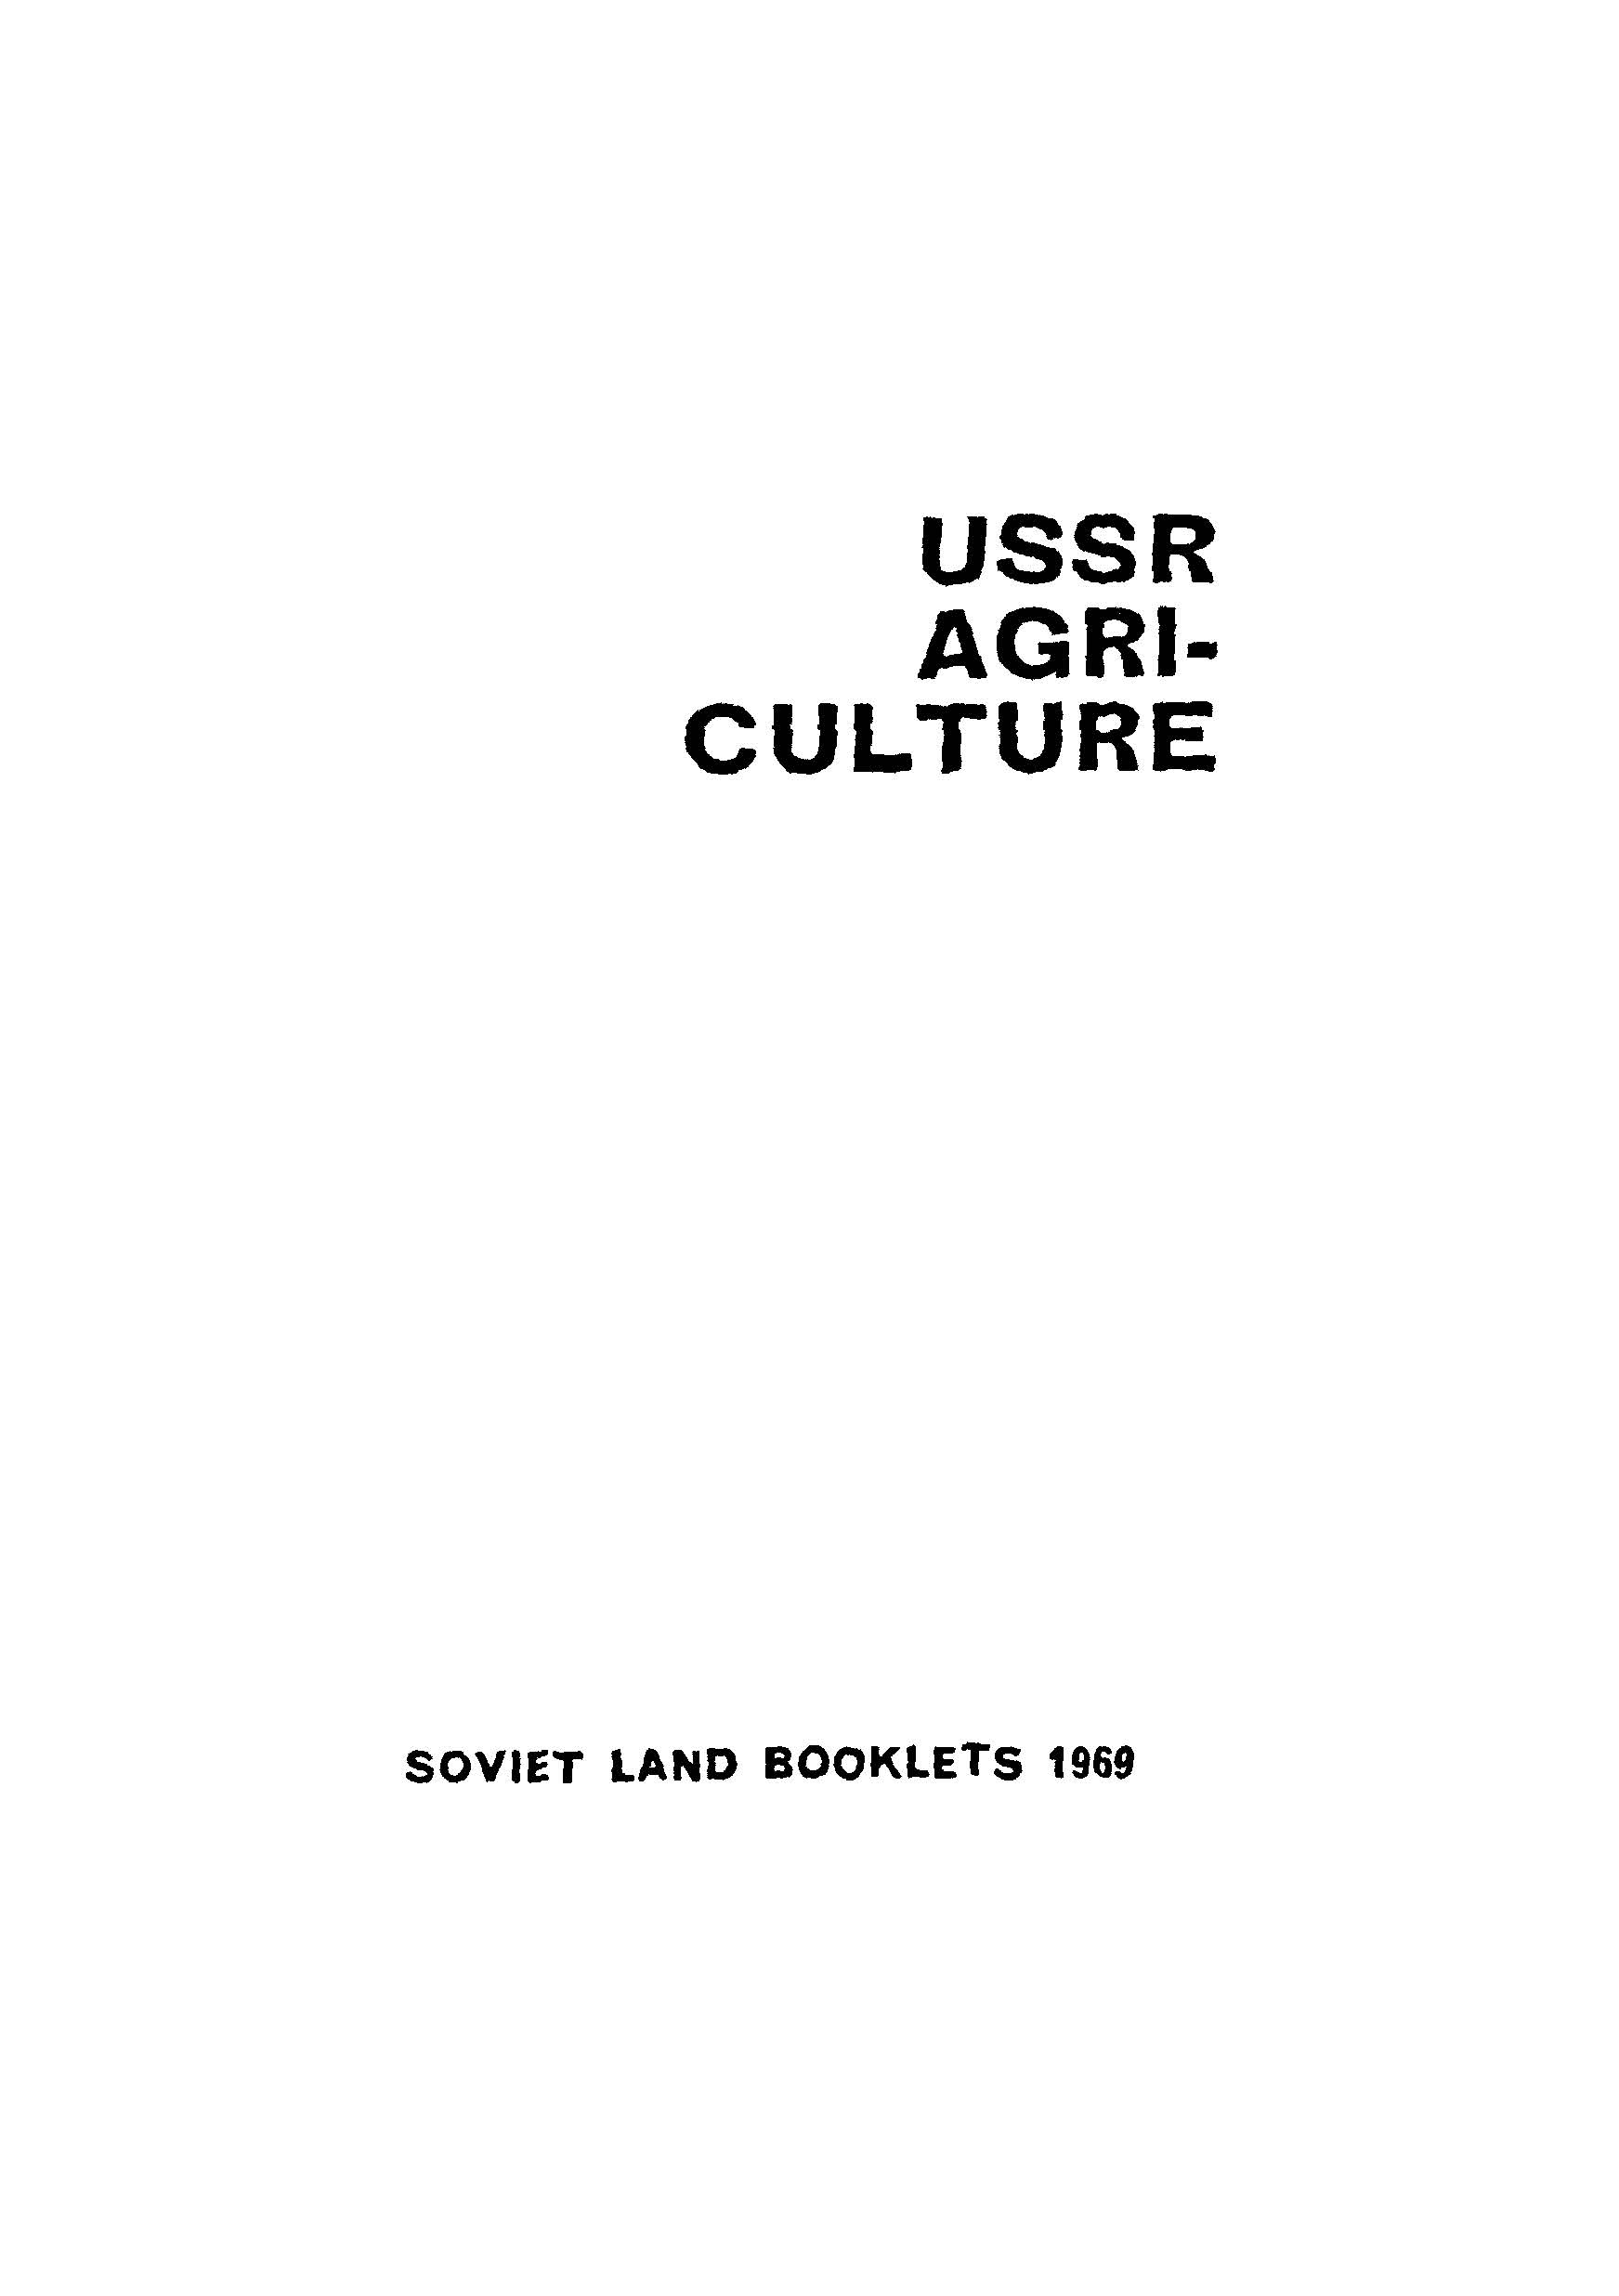 USSR agri-culture